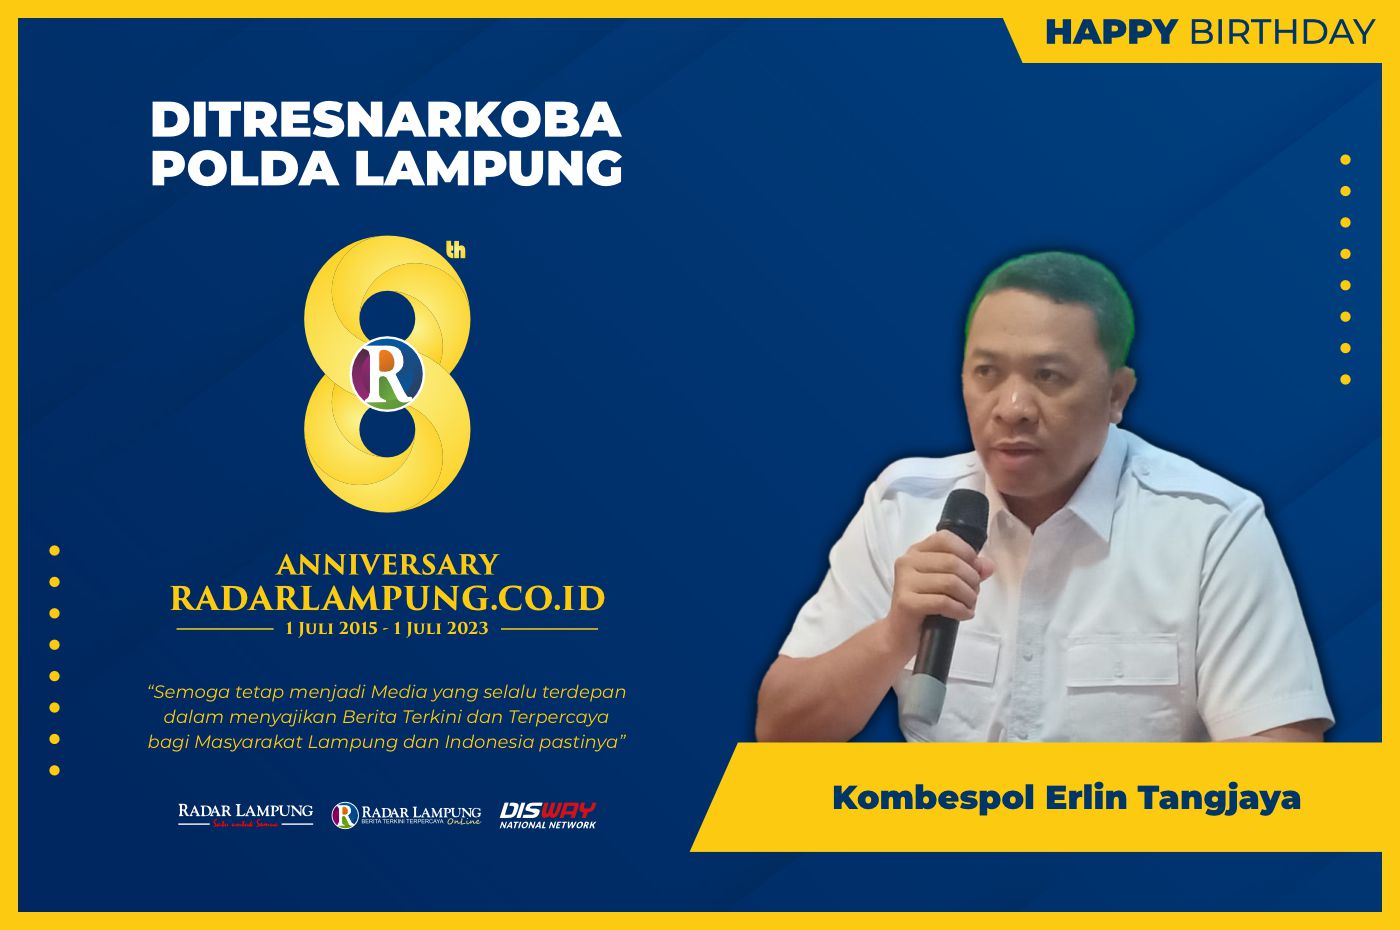 Ditresnarkoba Polda Lampung: Selamat Ulang Tahun Radar Lampung Online ke-8